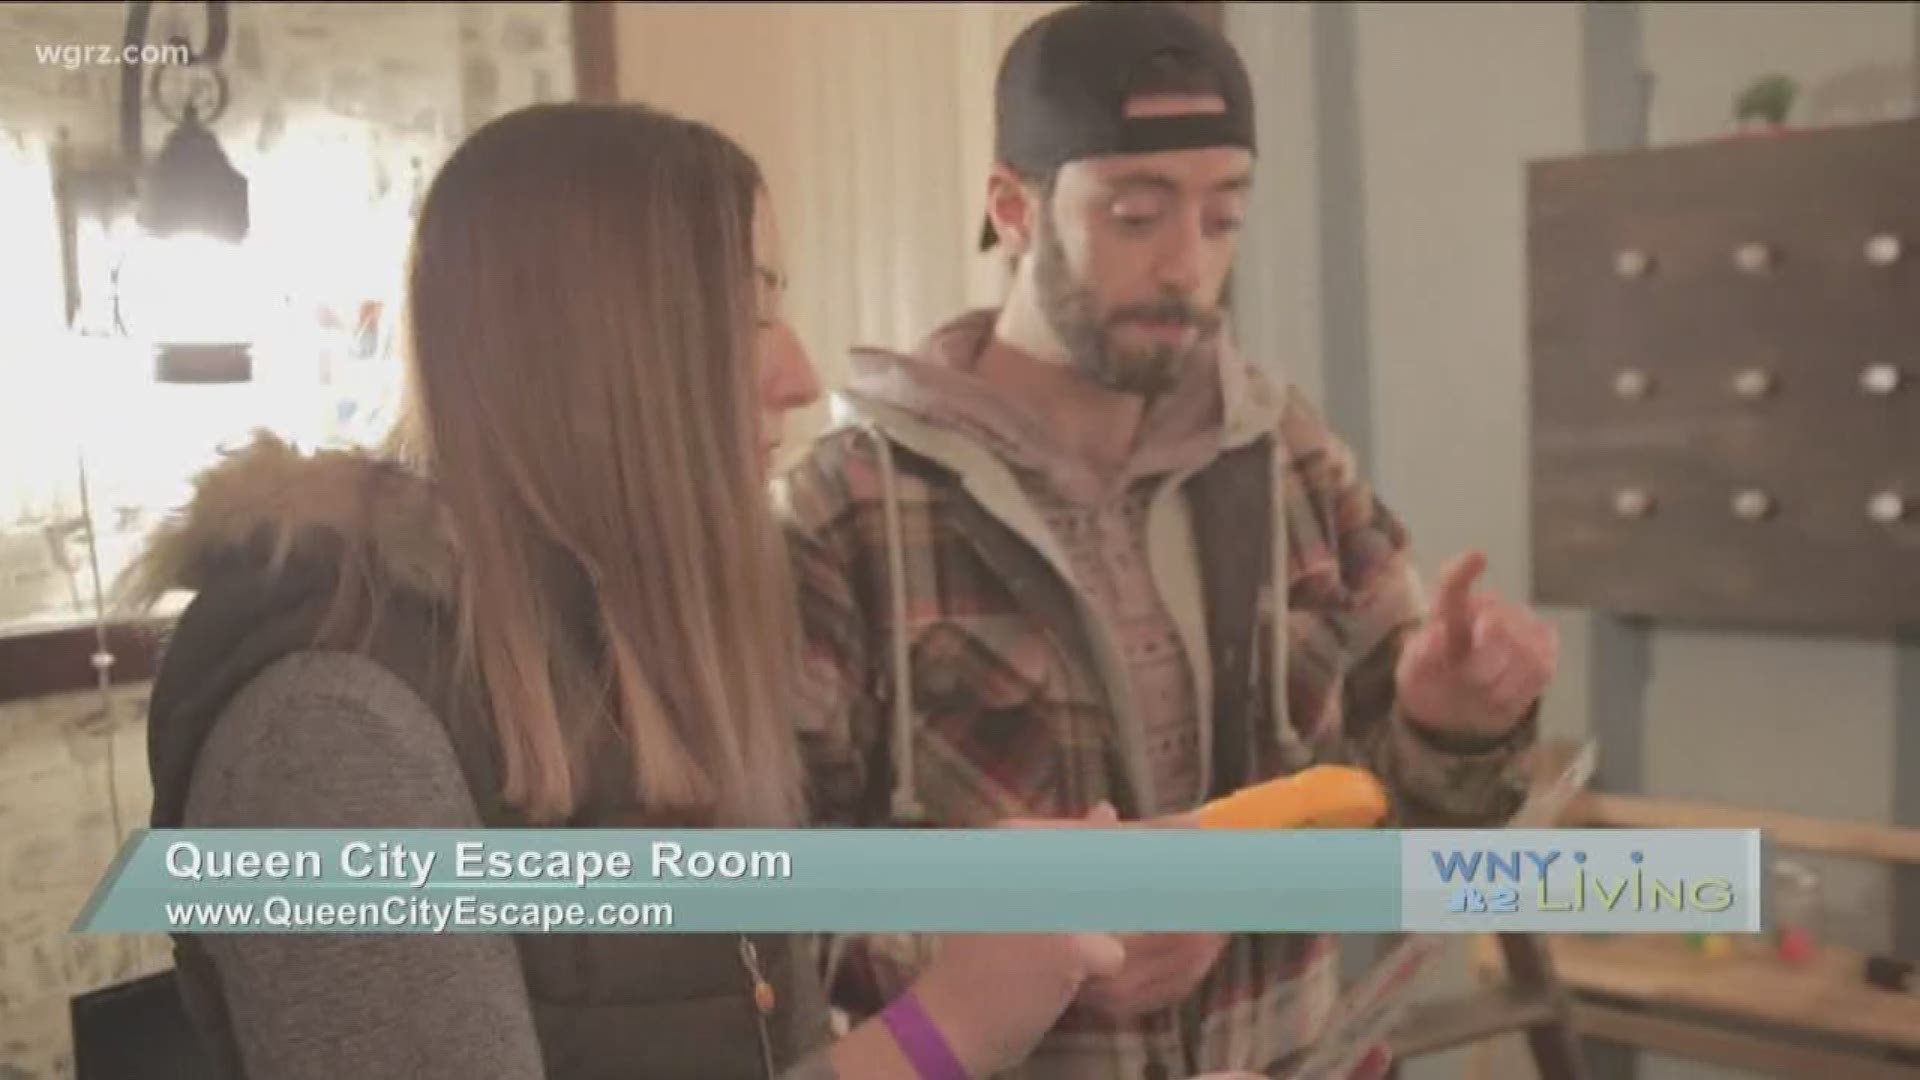 WNY Living - December 8 - Queen City Escape Room